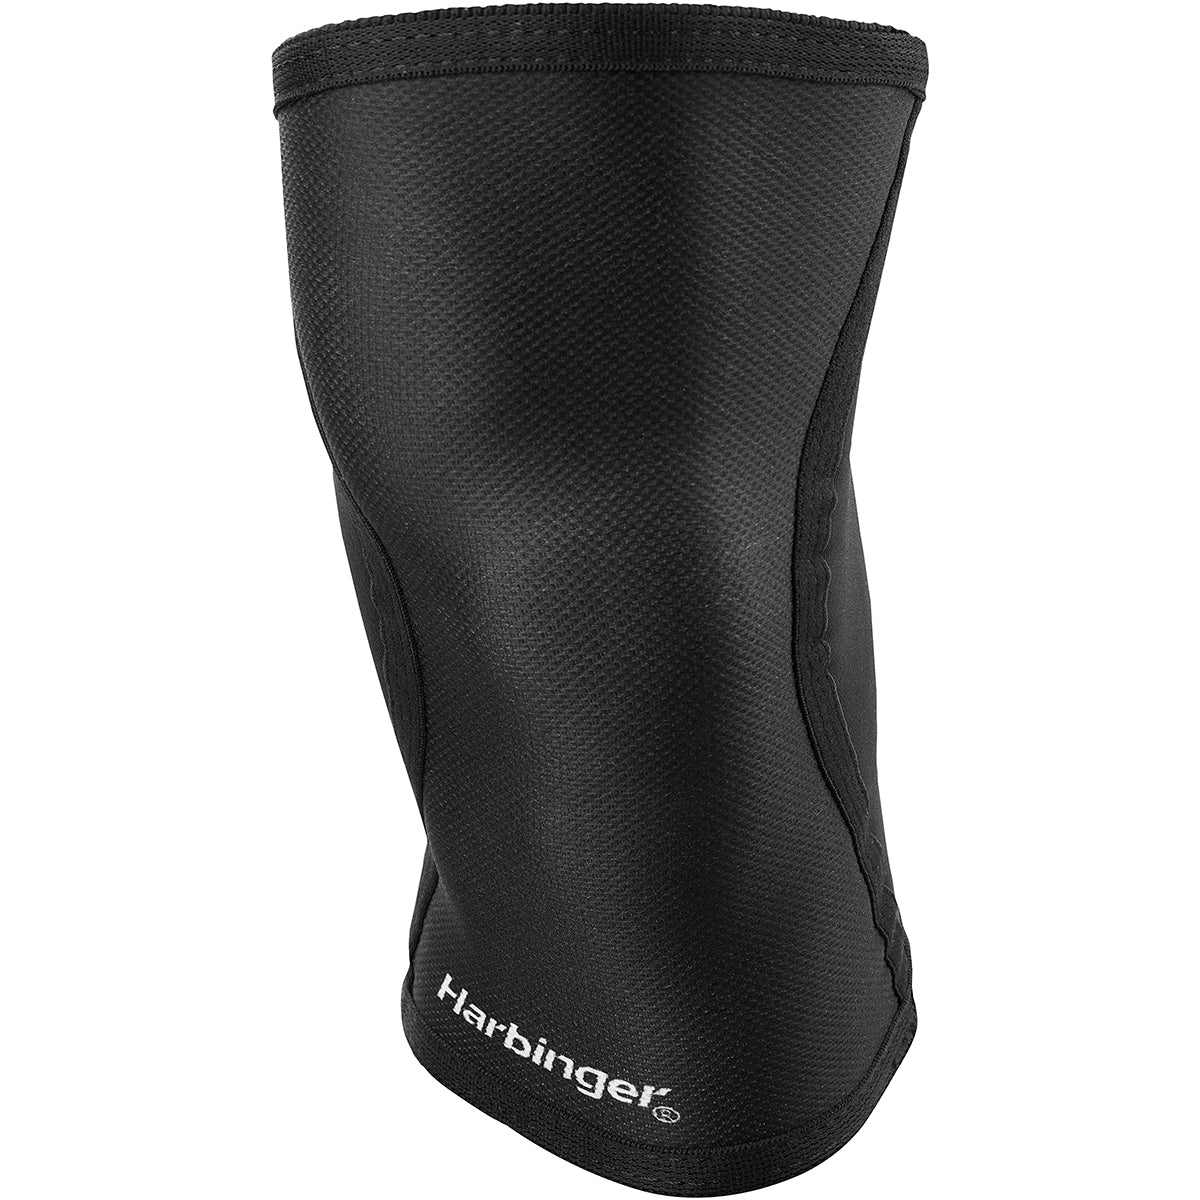 Harbinger 5mm Weight Lifting Knee Sleeves - Black Harbinger